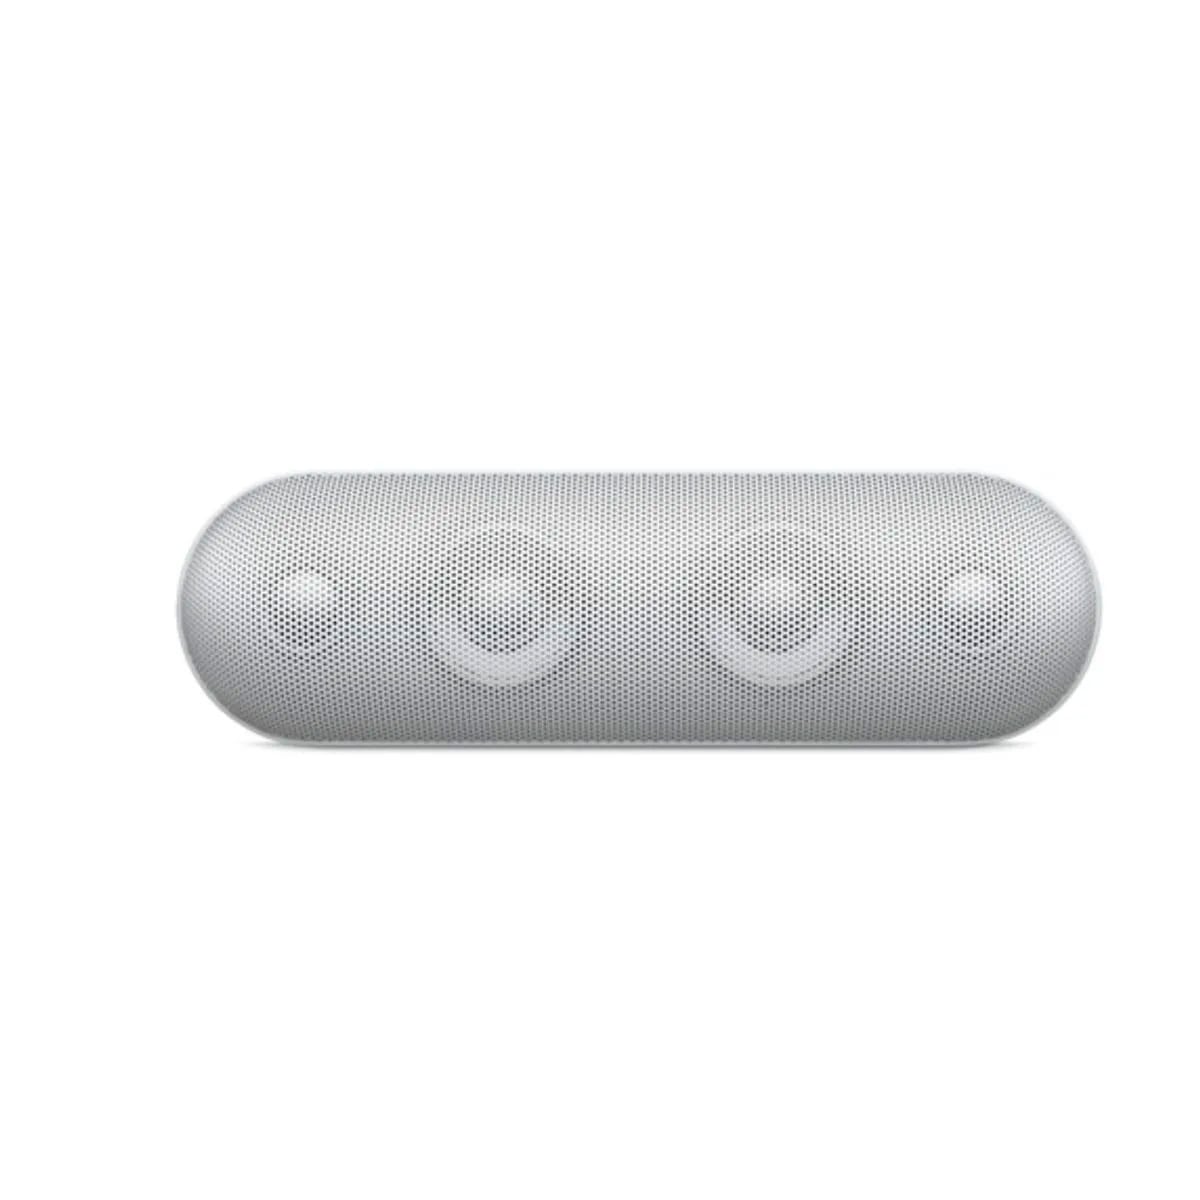 Caixa de Som portátil Beats Pill+, Bluetooth, Branca